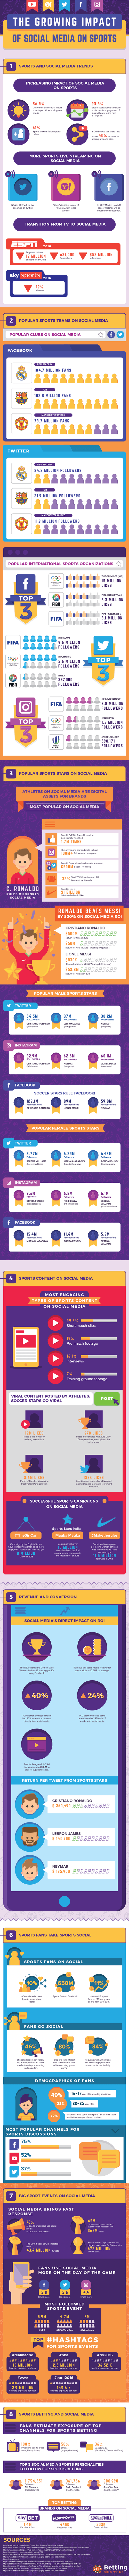 Infographic sport social media statistics